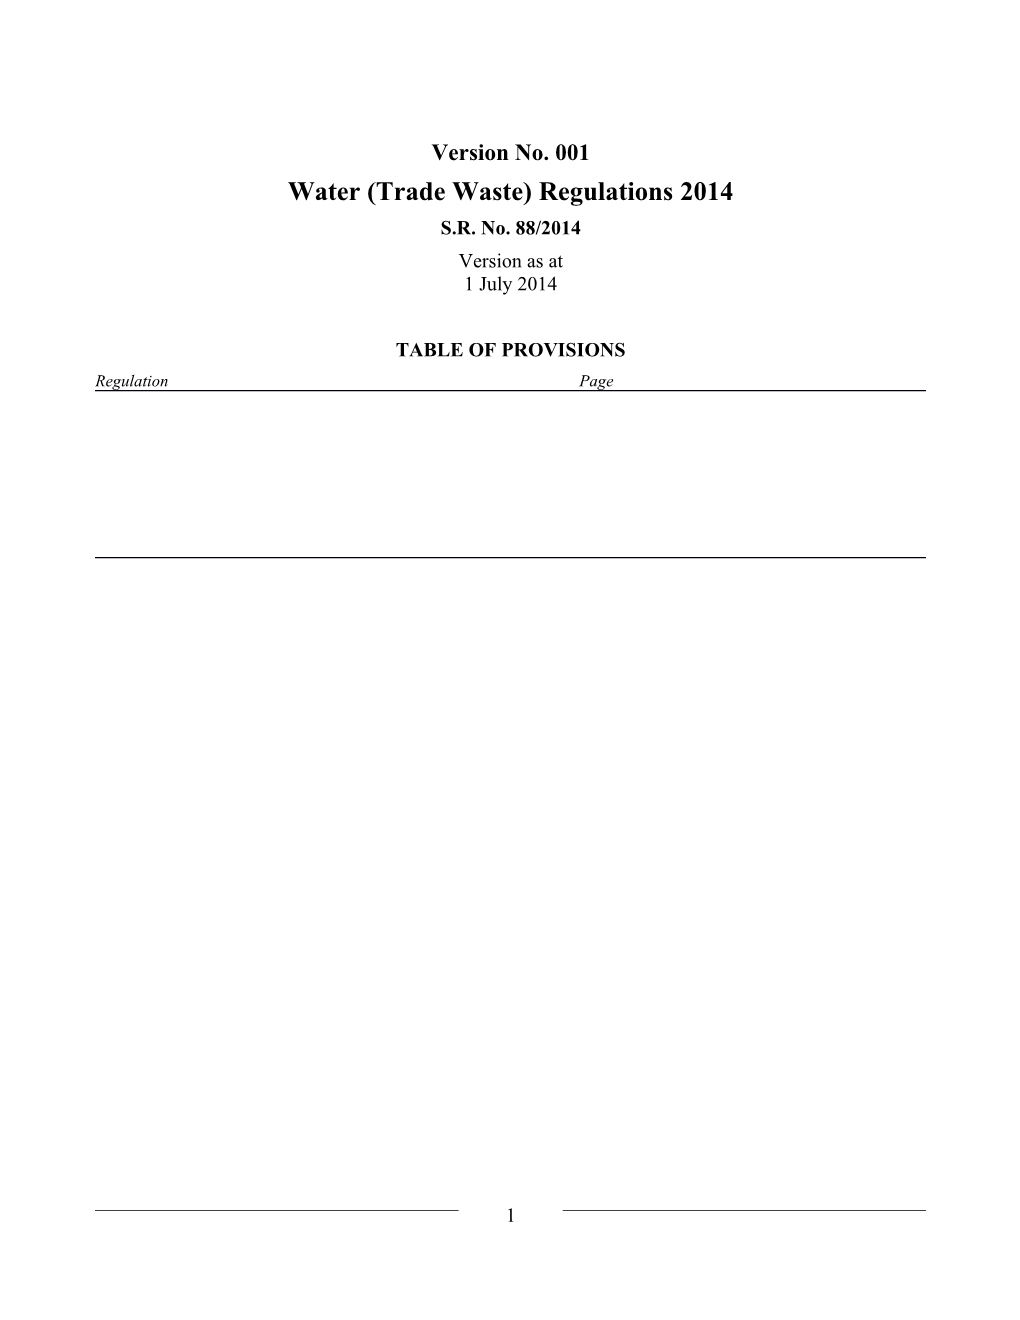 Water (Trade Waste) Regulations 2014